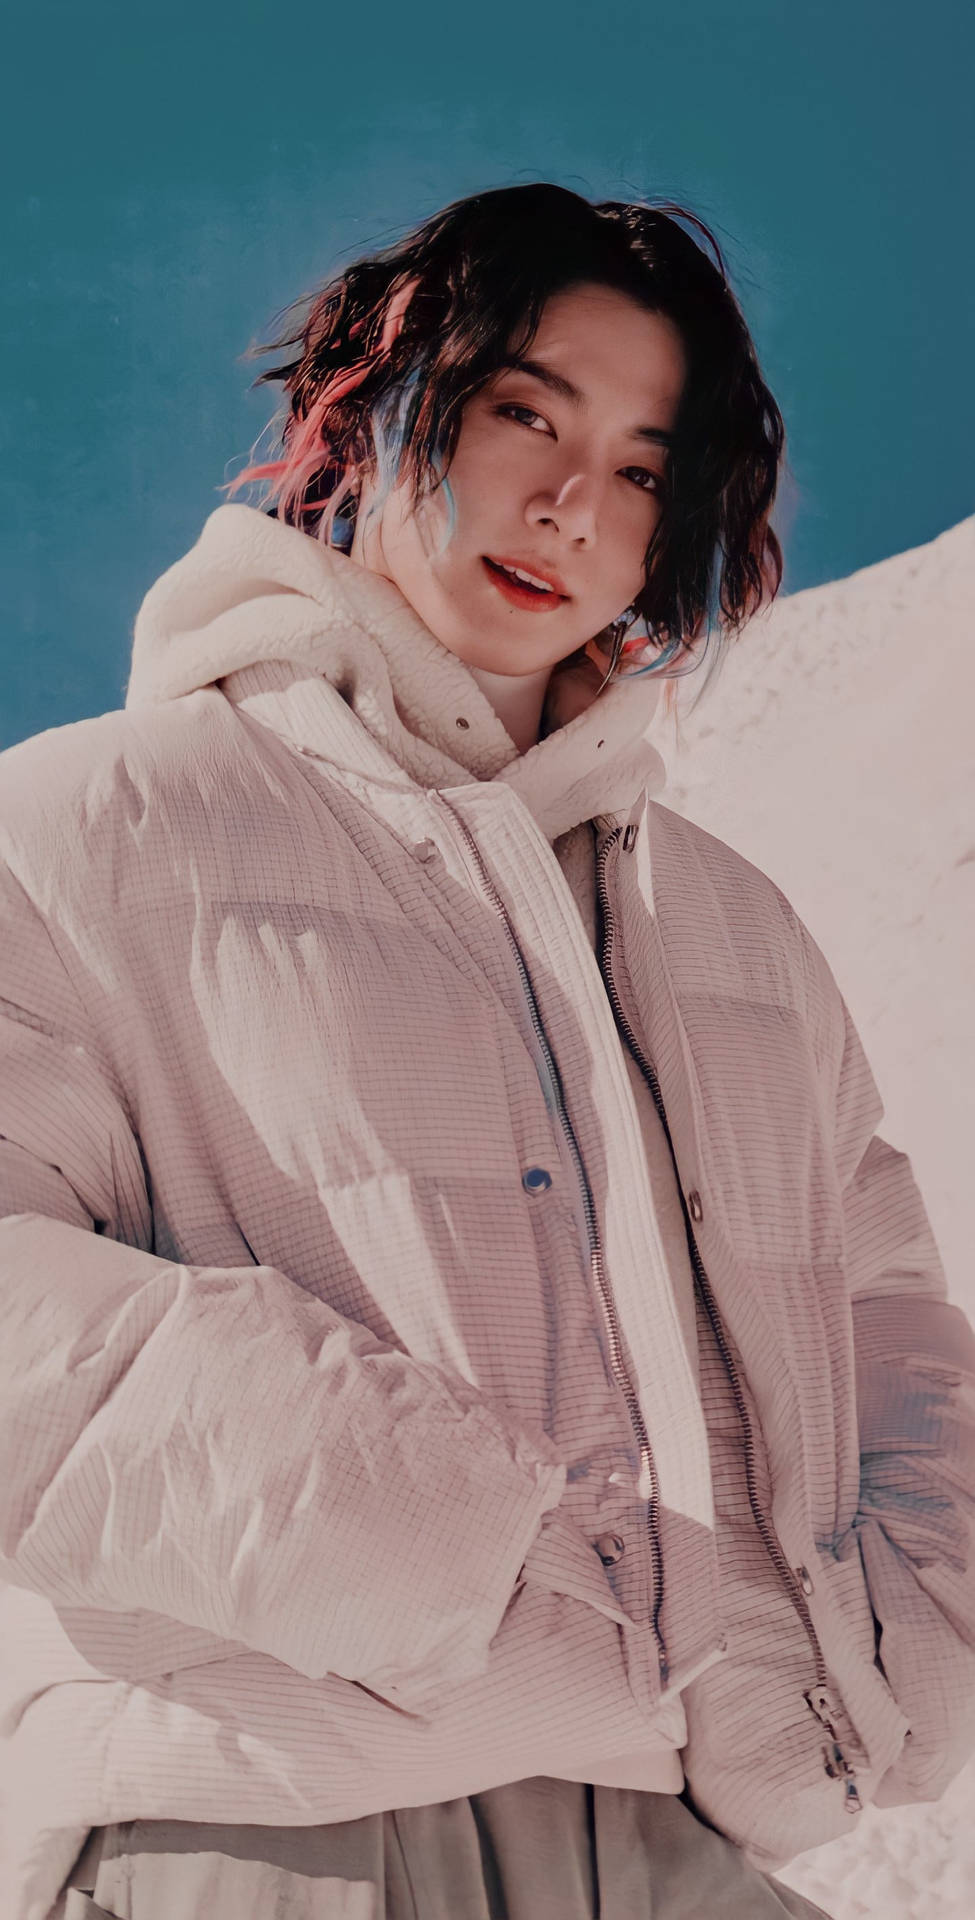 Bts Jung Kook Cute Winter Jacket Background